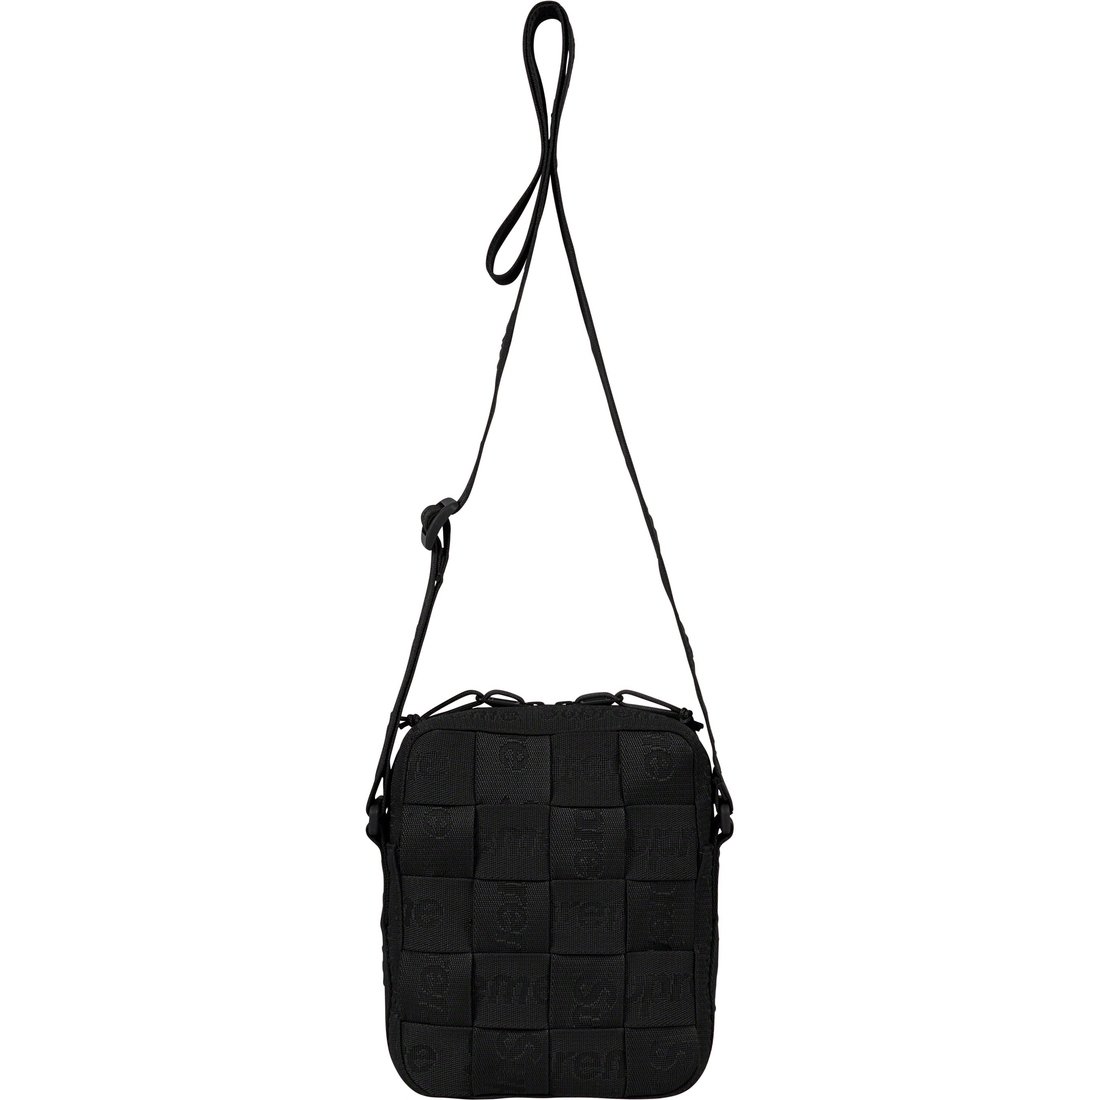 Details on Woven Shoulder Bag Black from spring summer
                                                    2023 (Price is $78)